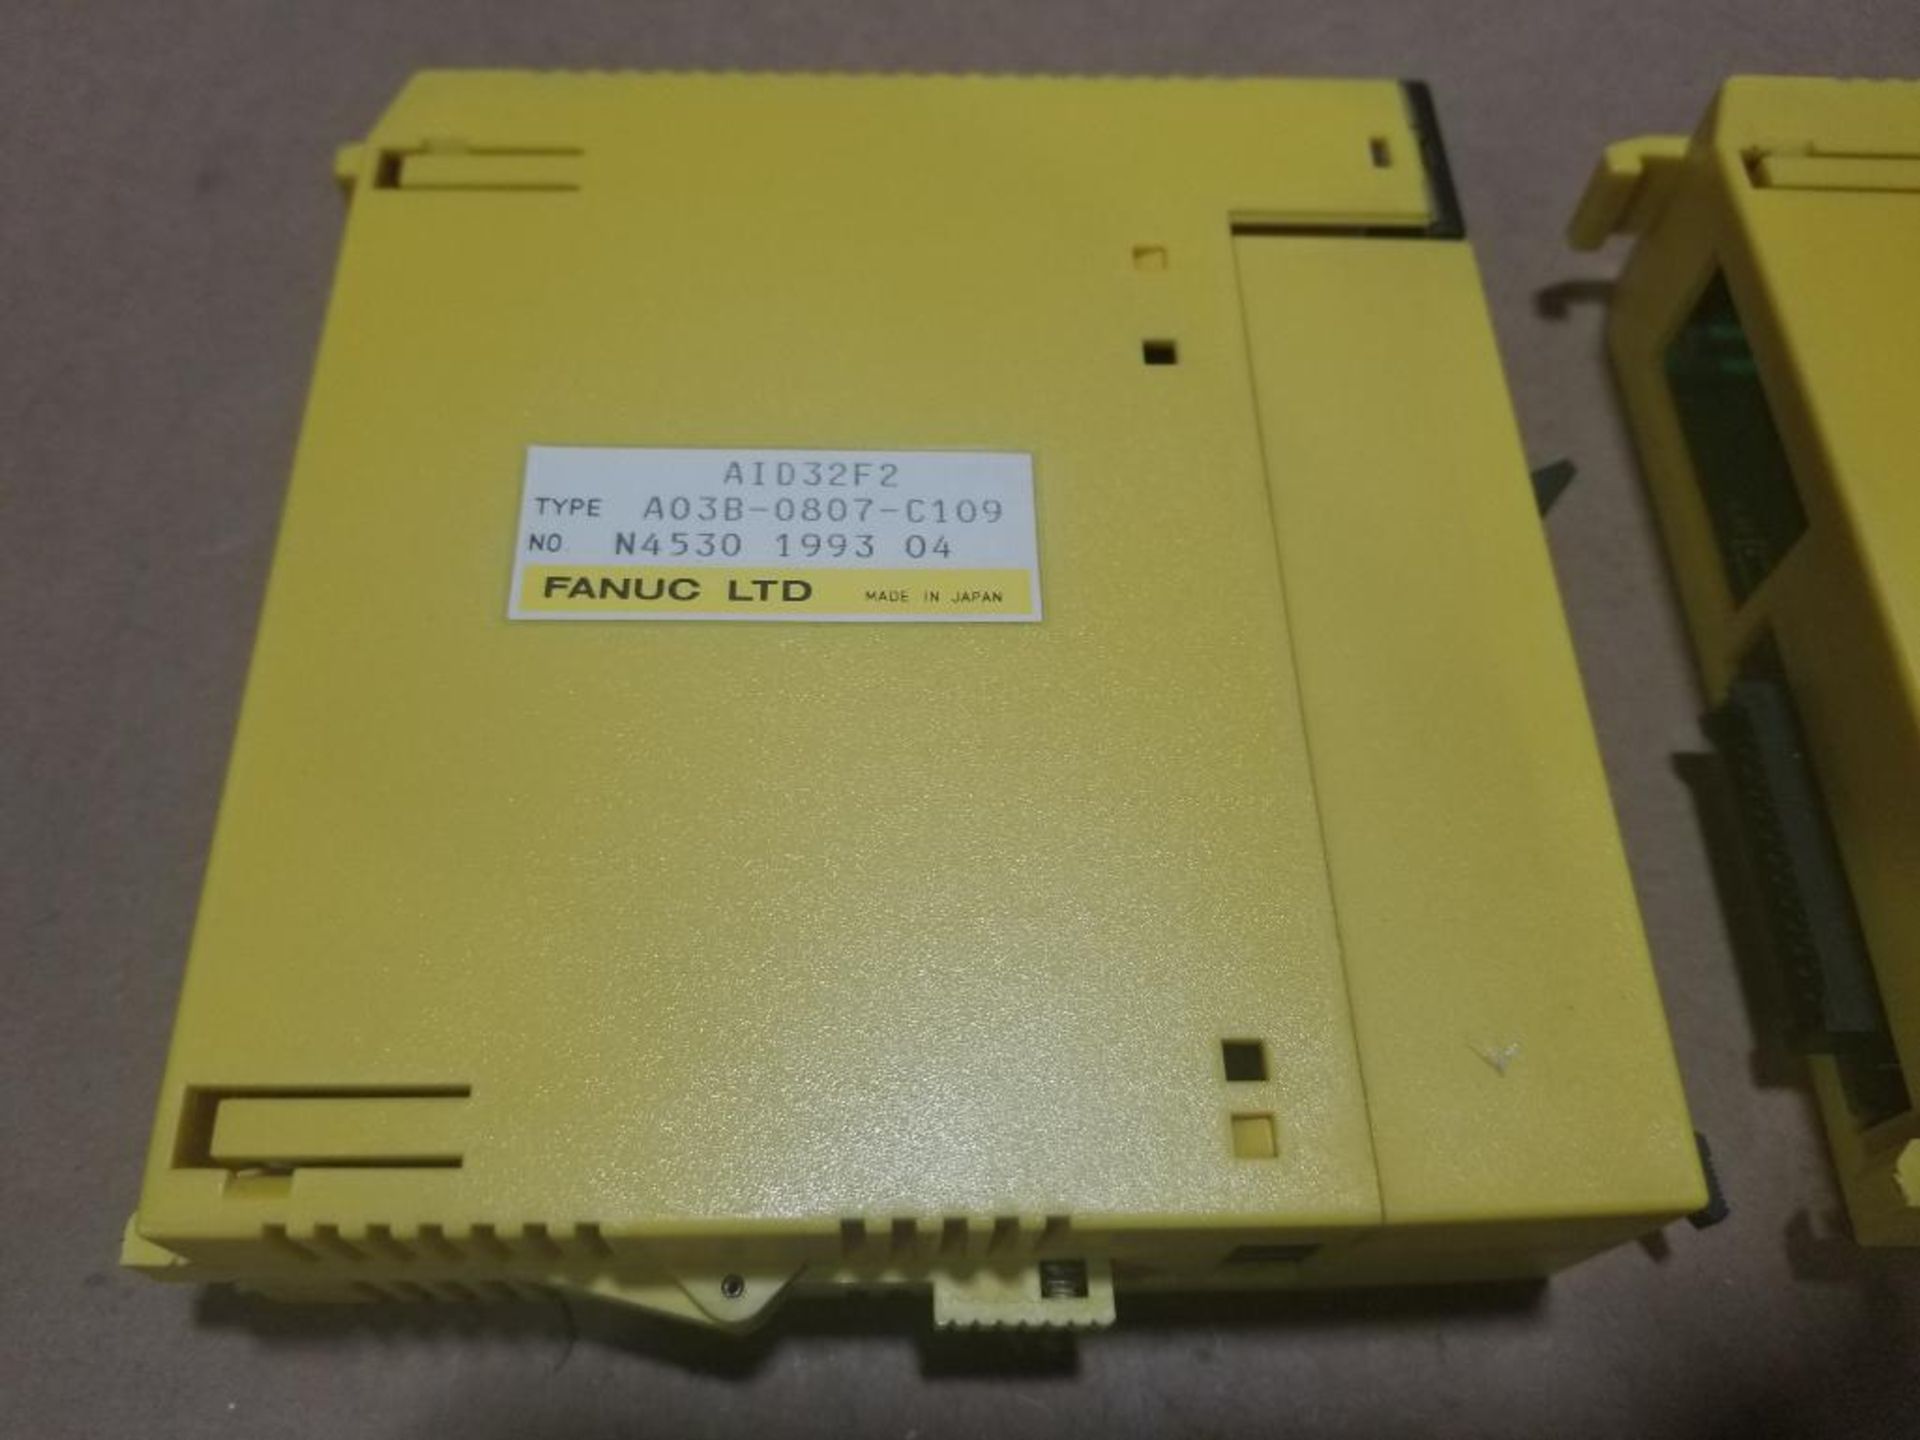 Qty 3 - Fanuc PLC cards. Part number A03B-0807-C109. - Image 3 of 5